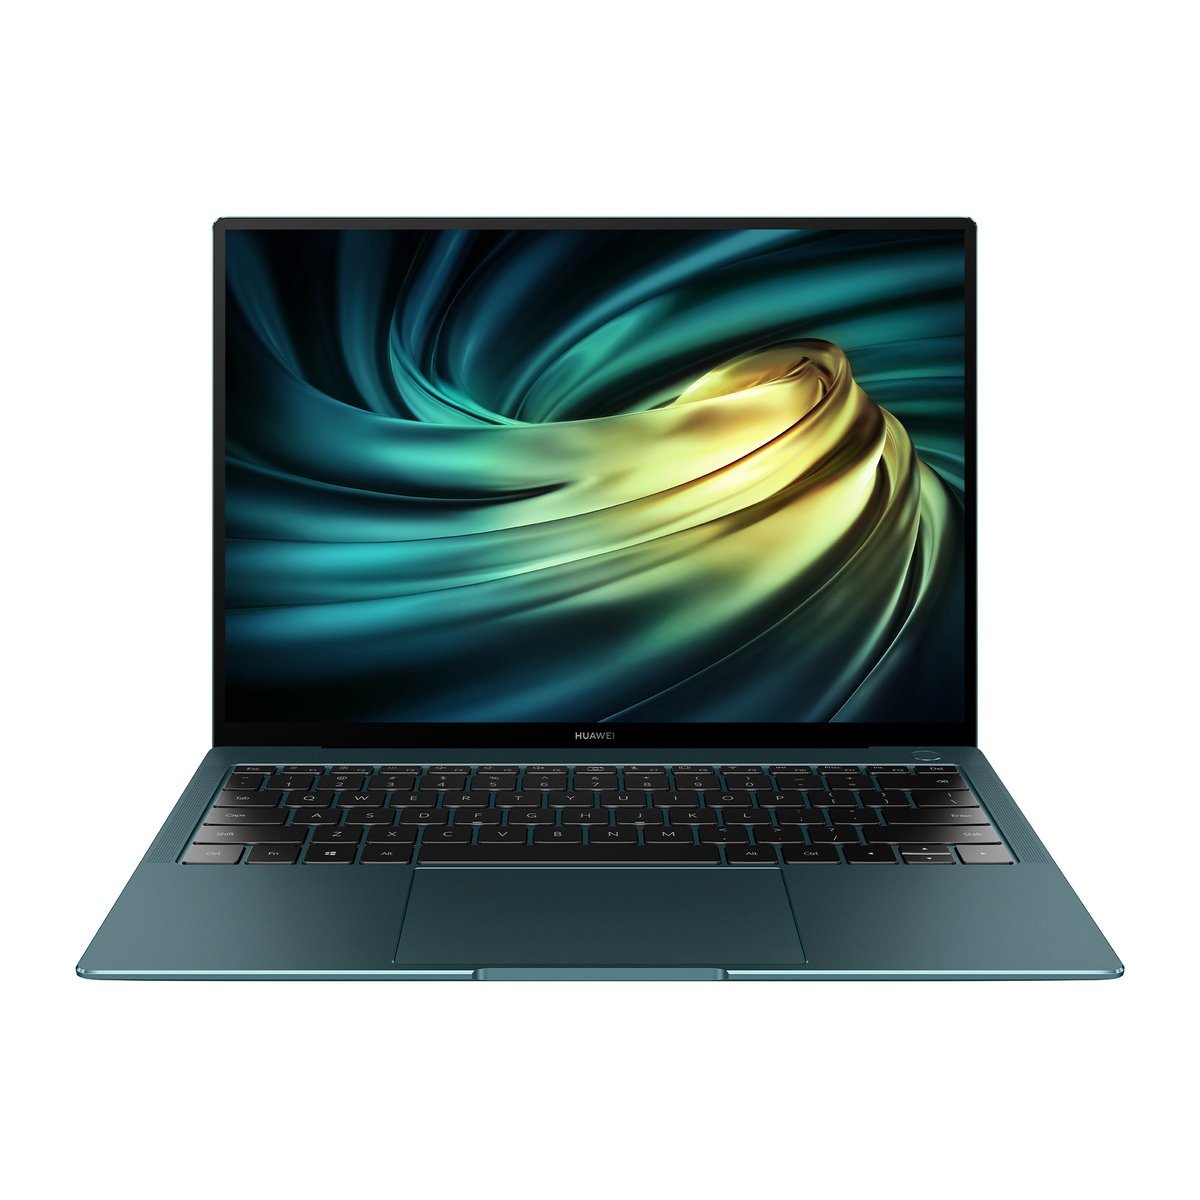 Huawei MateBook X Pro 13.9in i7 16GB 1TB MX250 Laptop - Emerald Green - Store 974 | ستور ٩٧٤